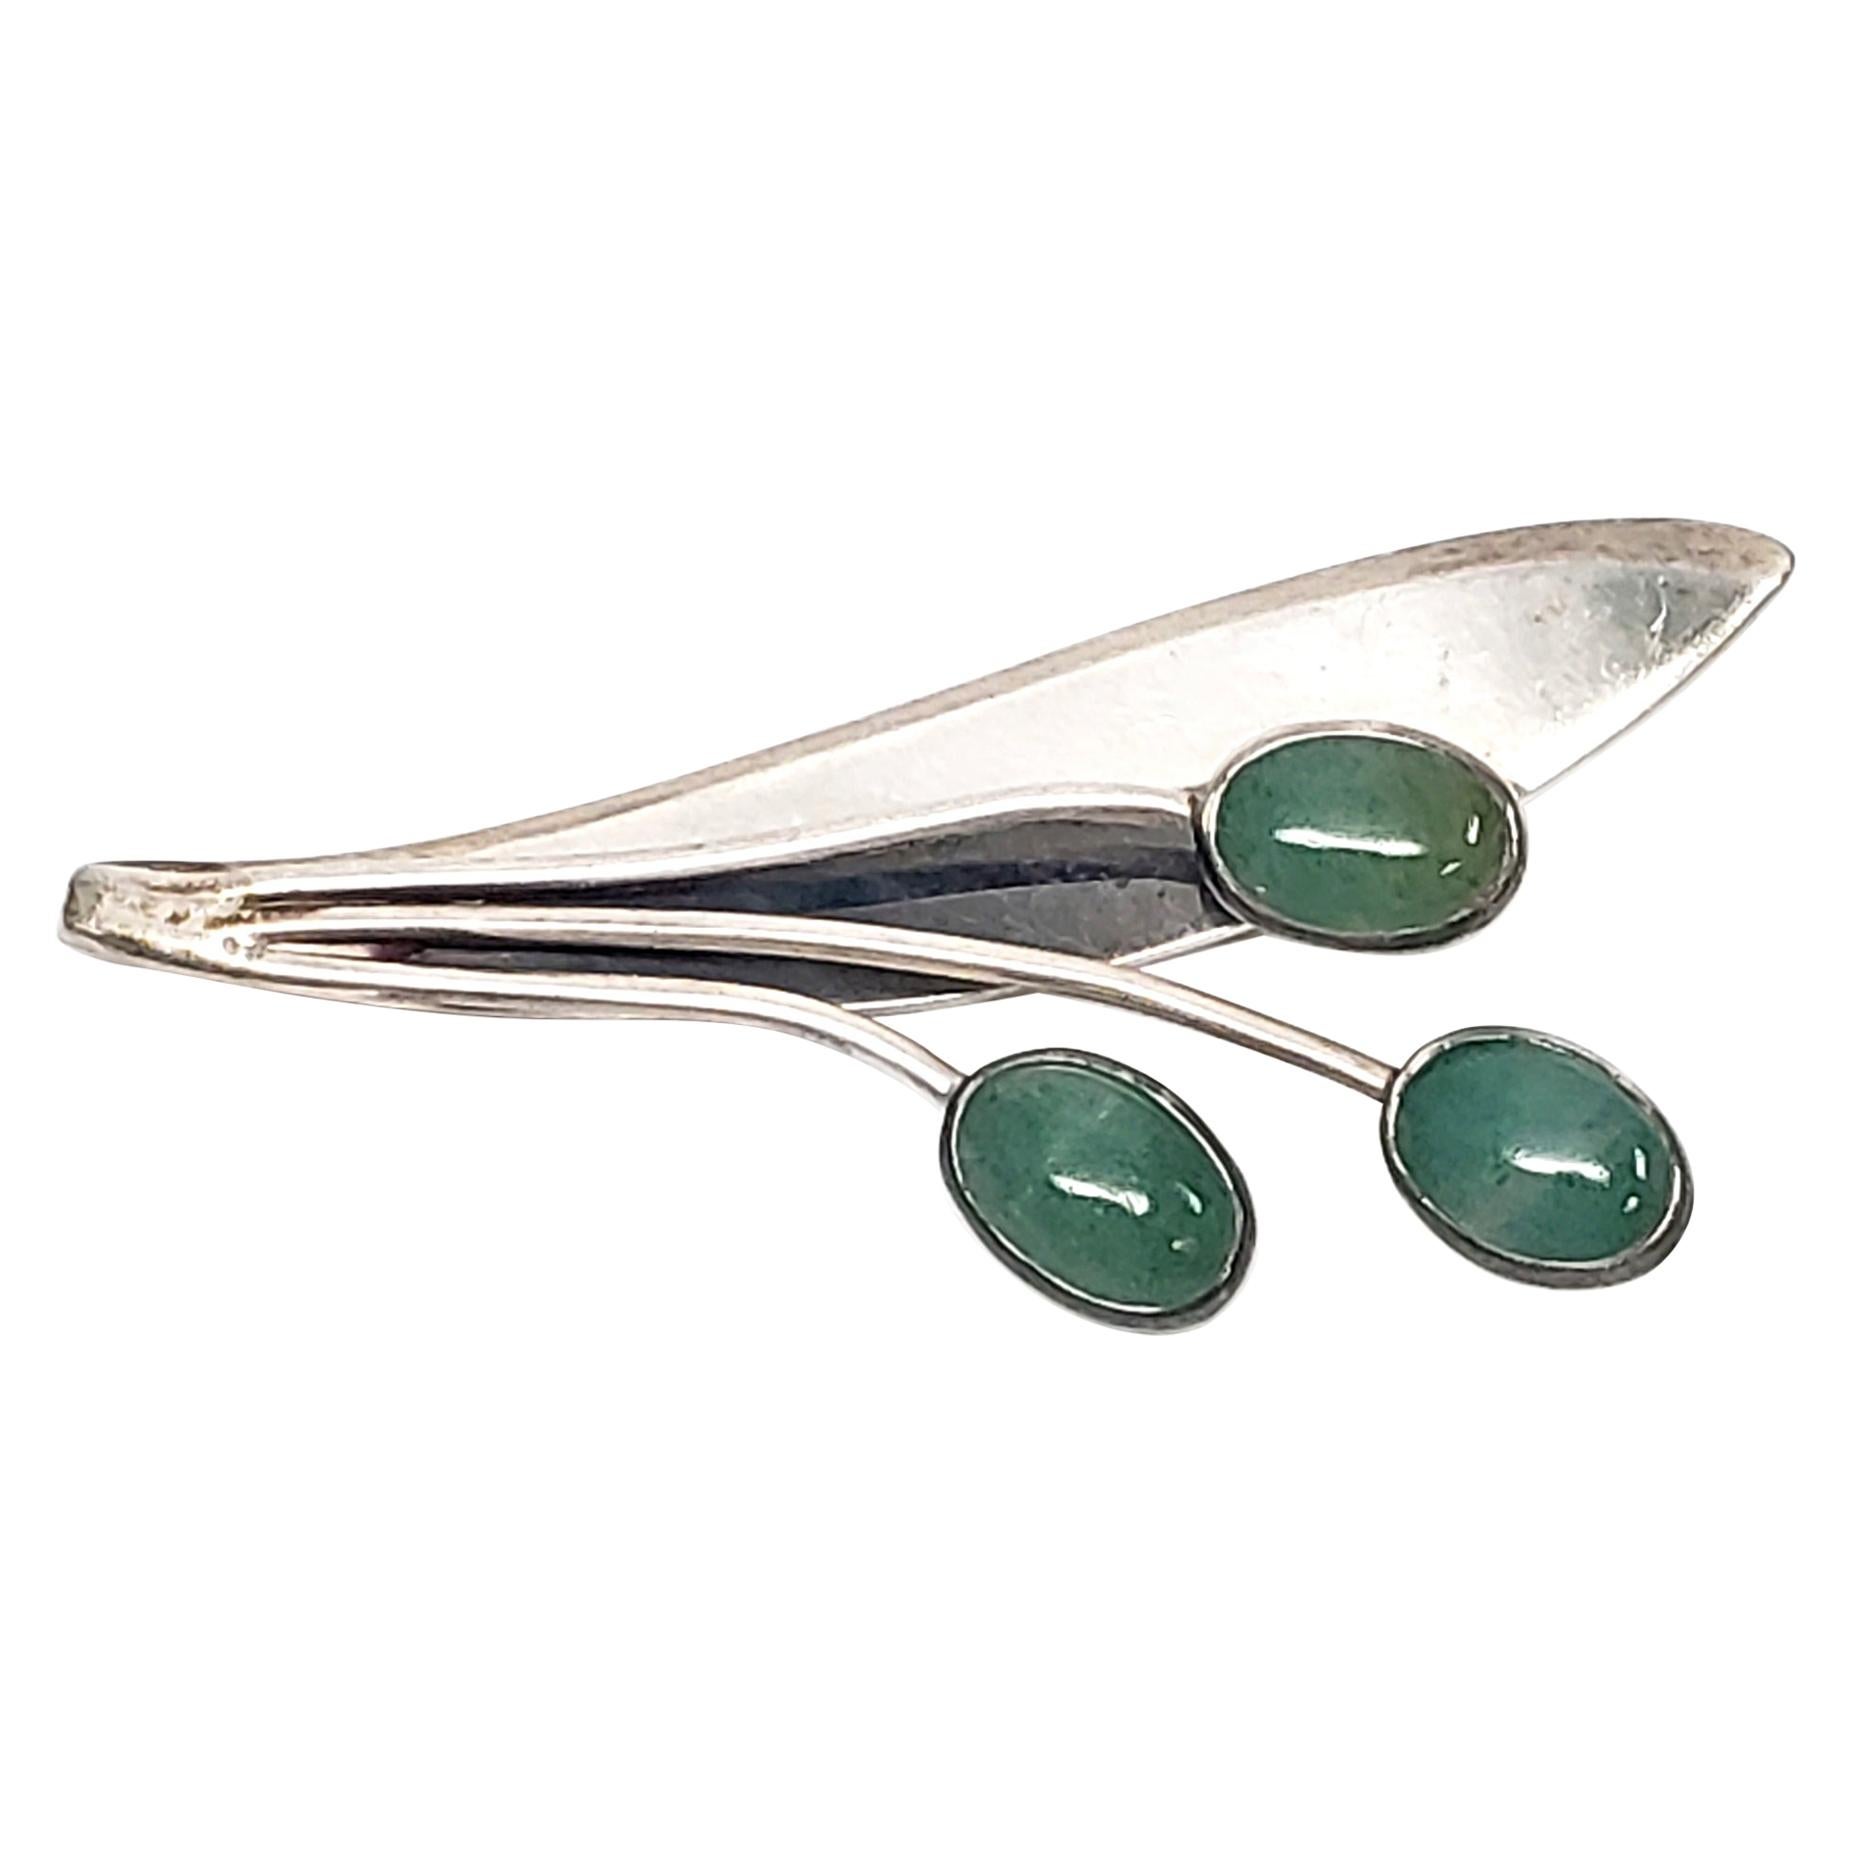 Taxco Sigi Pineda Sterling Silver Green Onyx Leaf Pin / Brooch #70